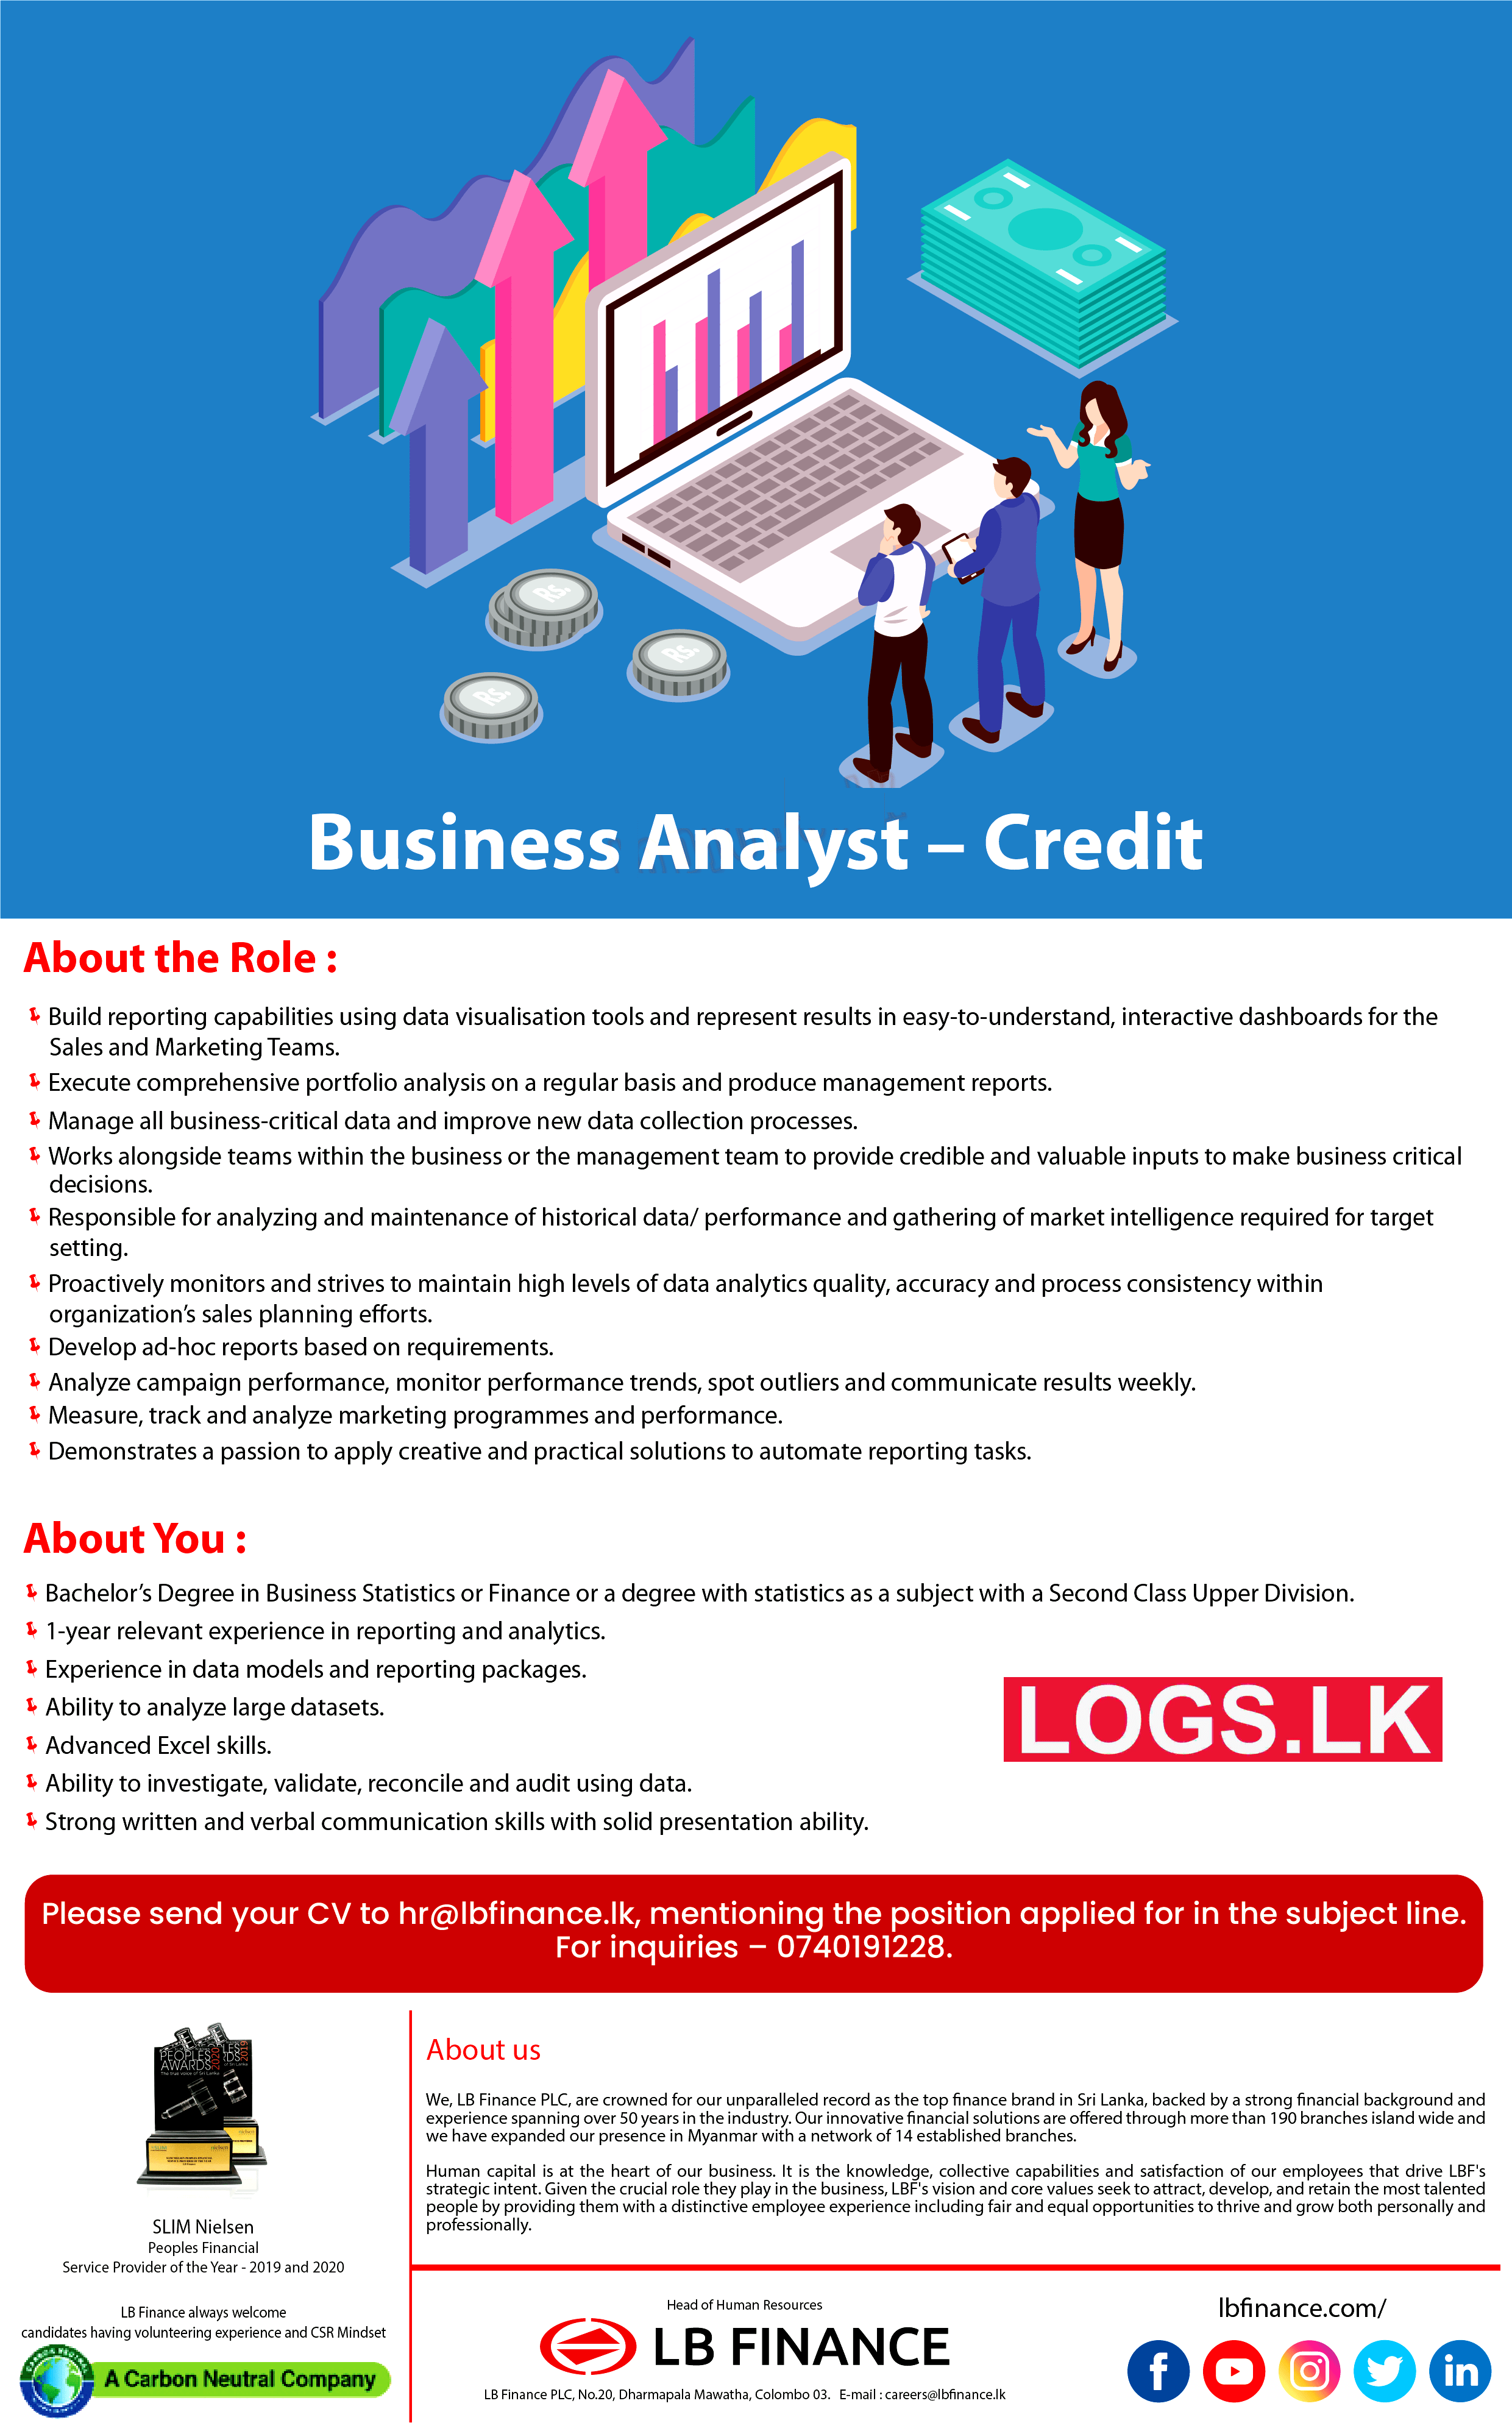 Business Analyst (Credit) Job Vacancy at LB Finance Job Vacancies in Sri Lanka